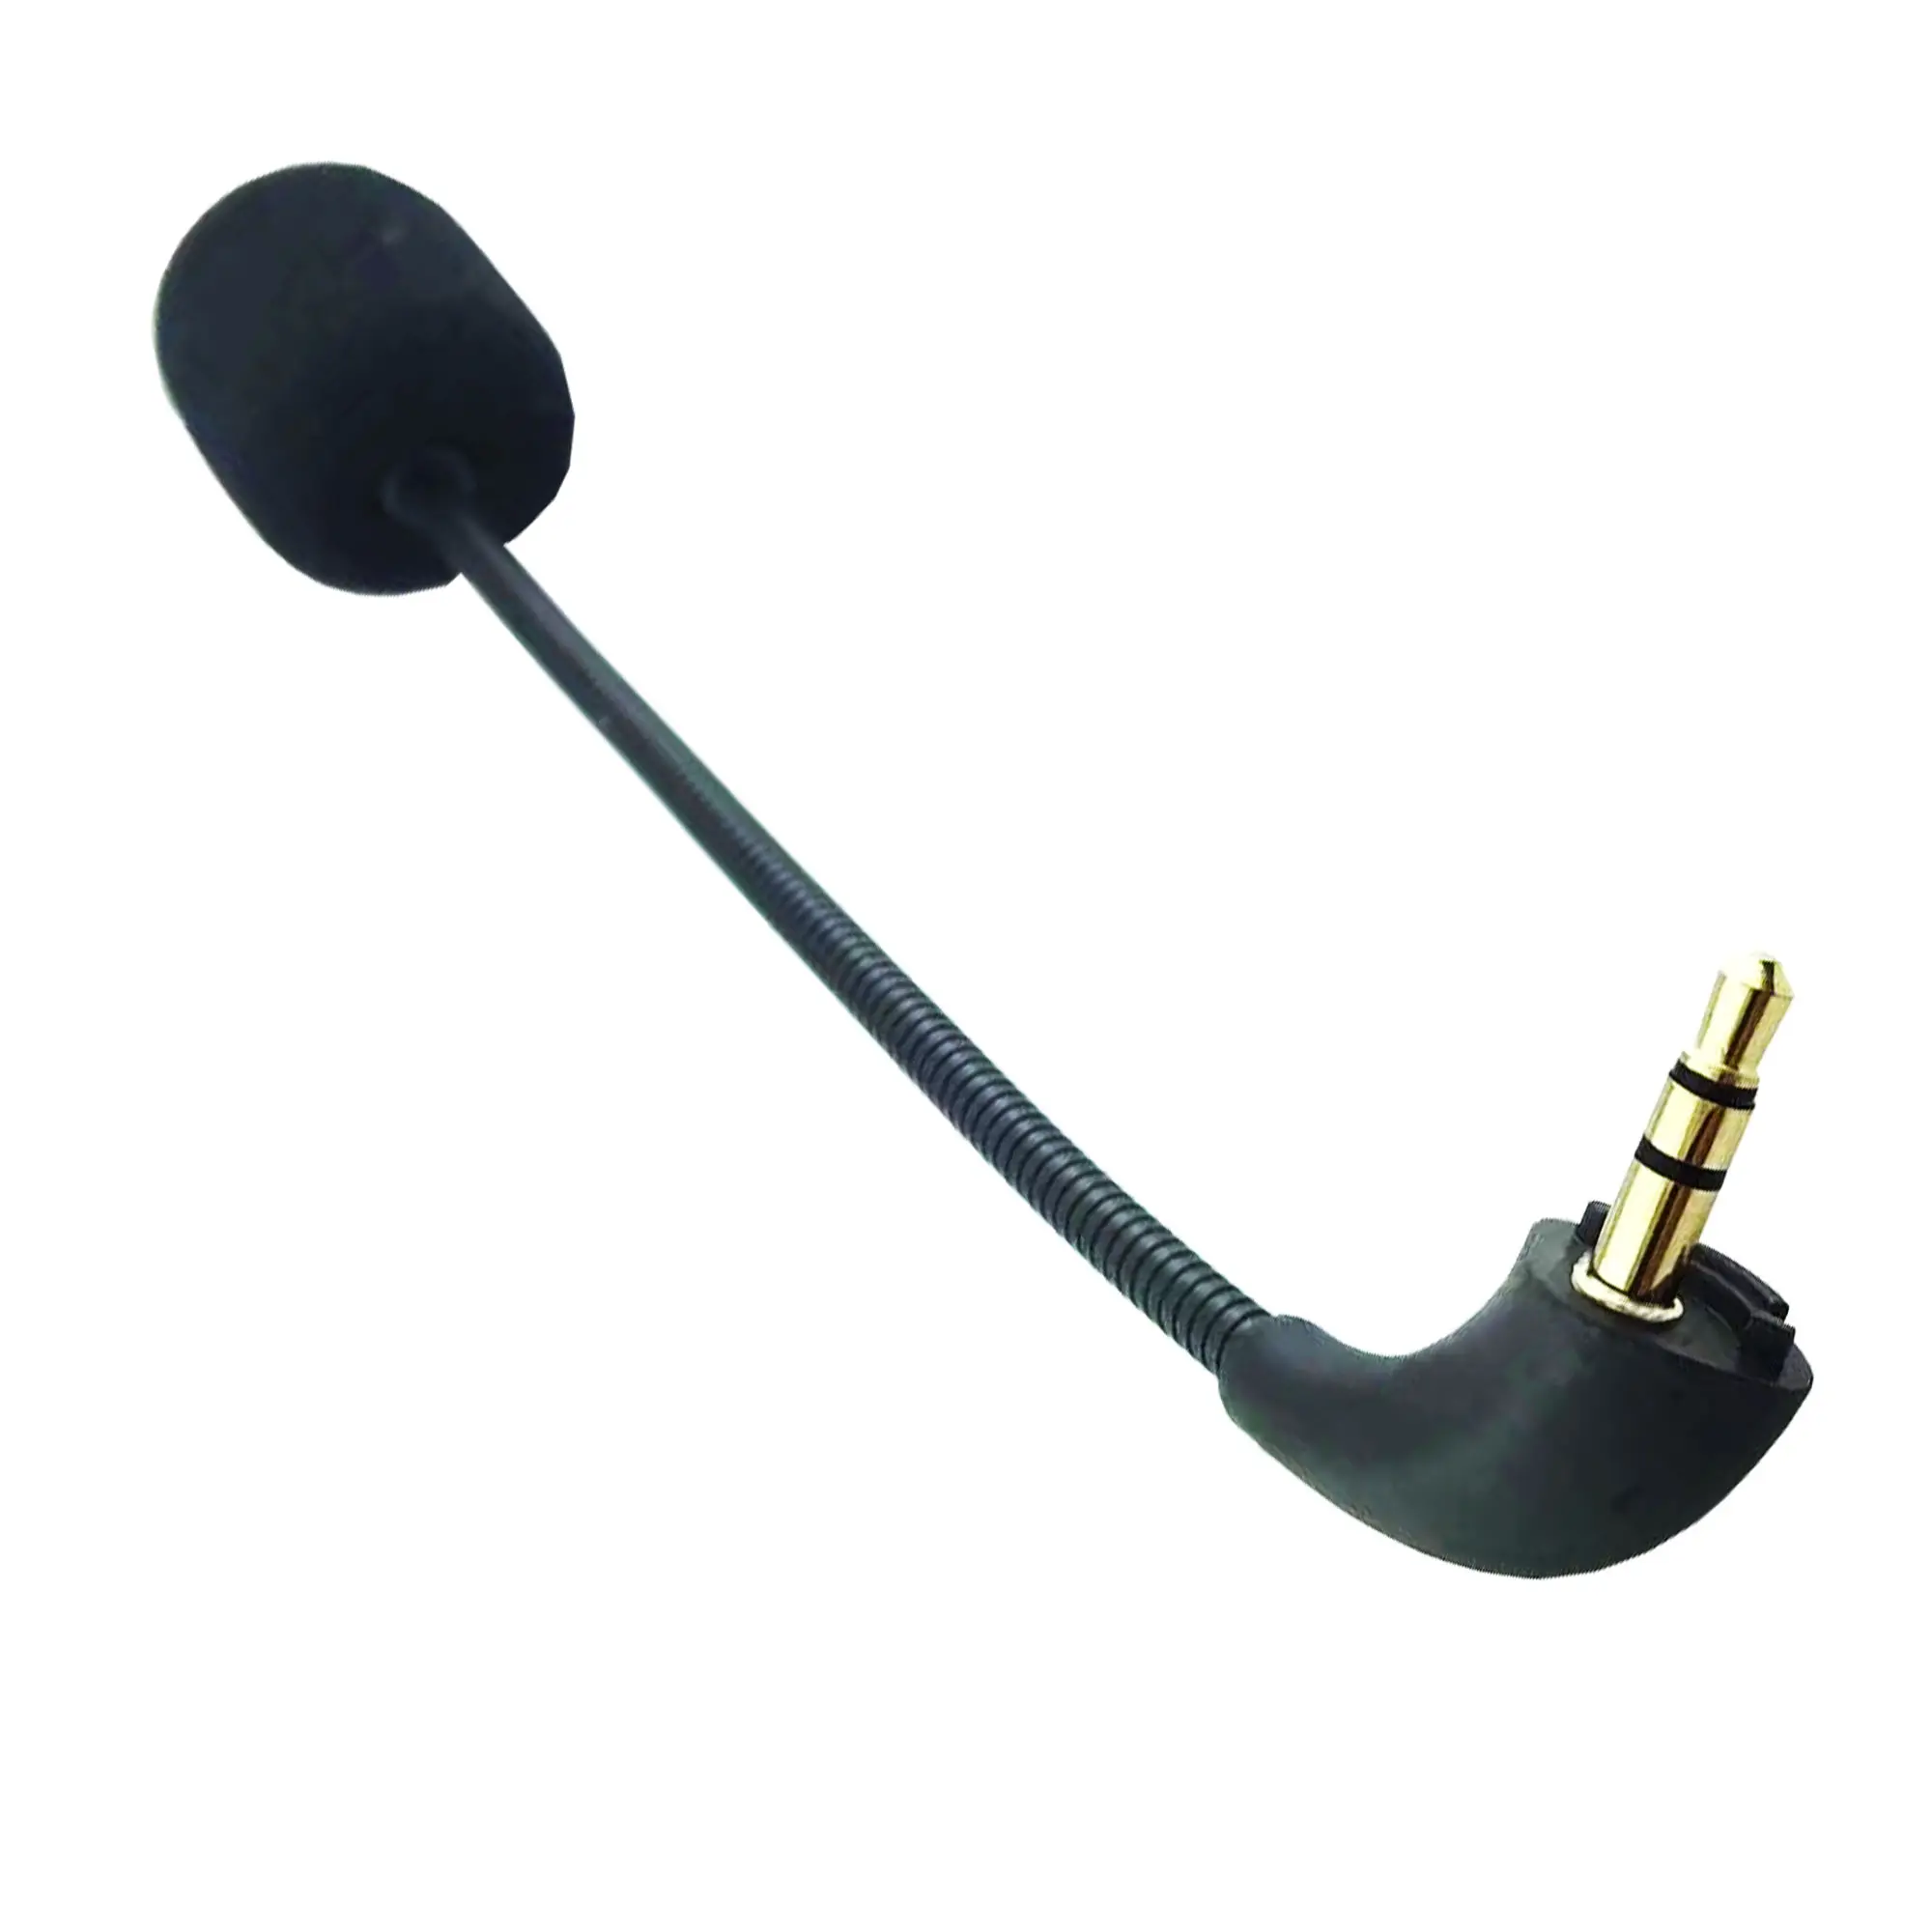 Adecuado para auriculares Edifier, micrófono de reducción de ruido desmontable K750w K800, micrófono versión competitiva, micrófono de retorno de oreja